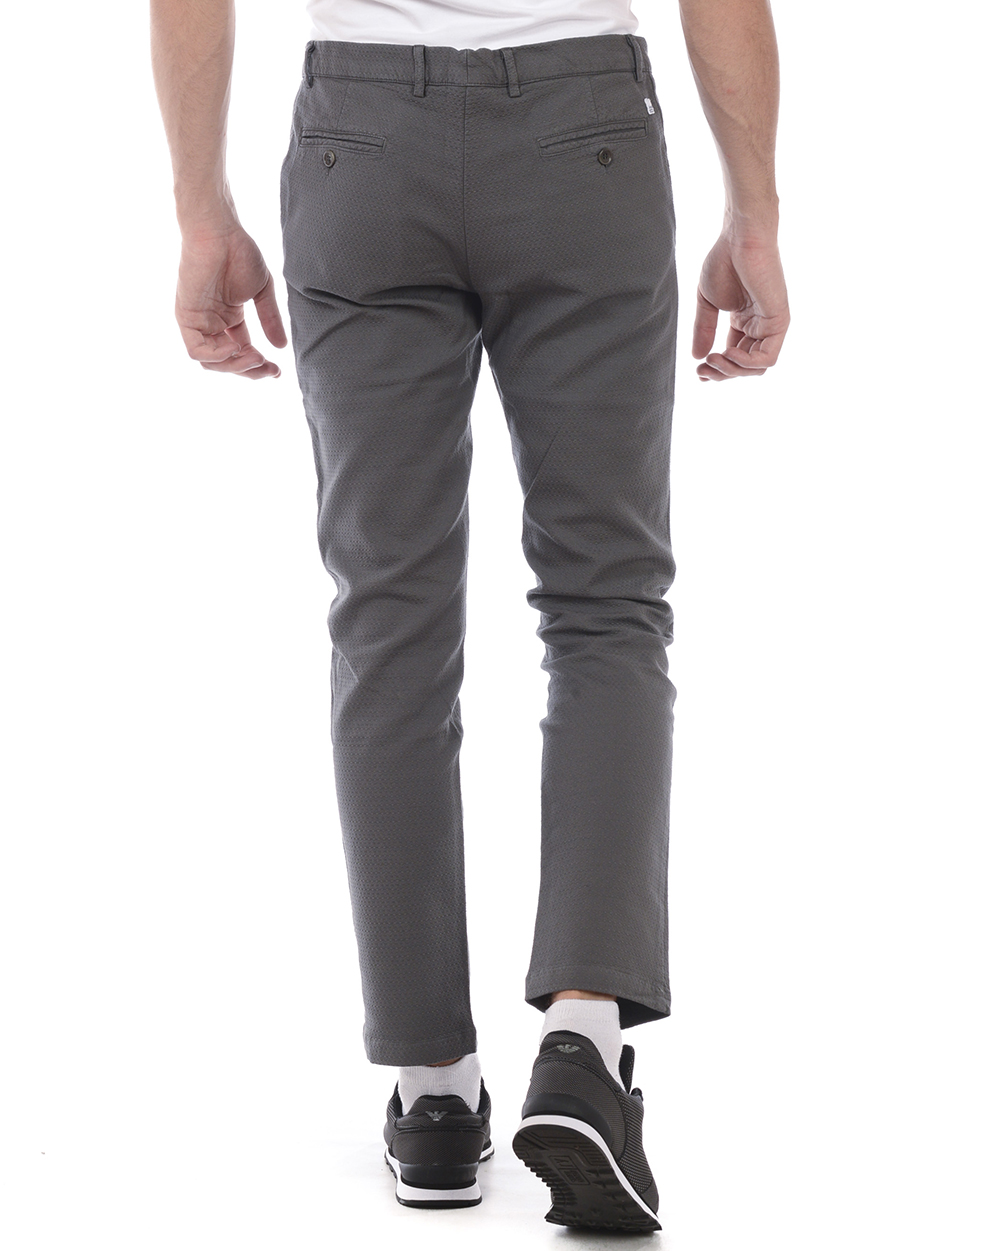 Daniele Alessandrini Jeans Trouser Cotton Man Grey P33223807 10 | eBay